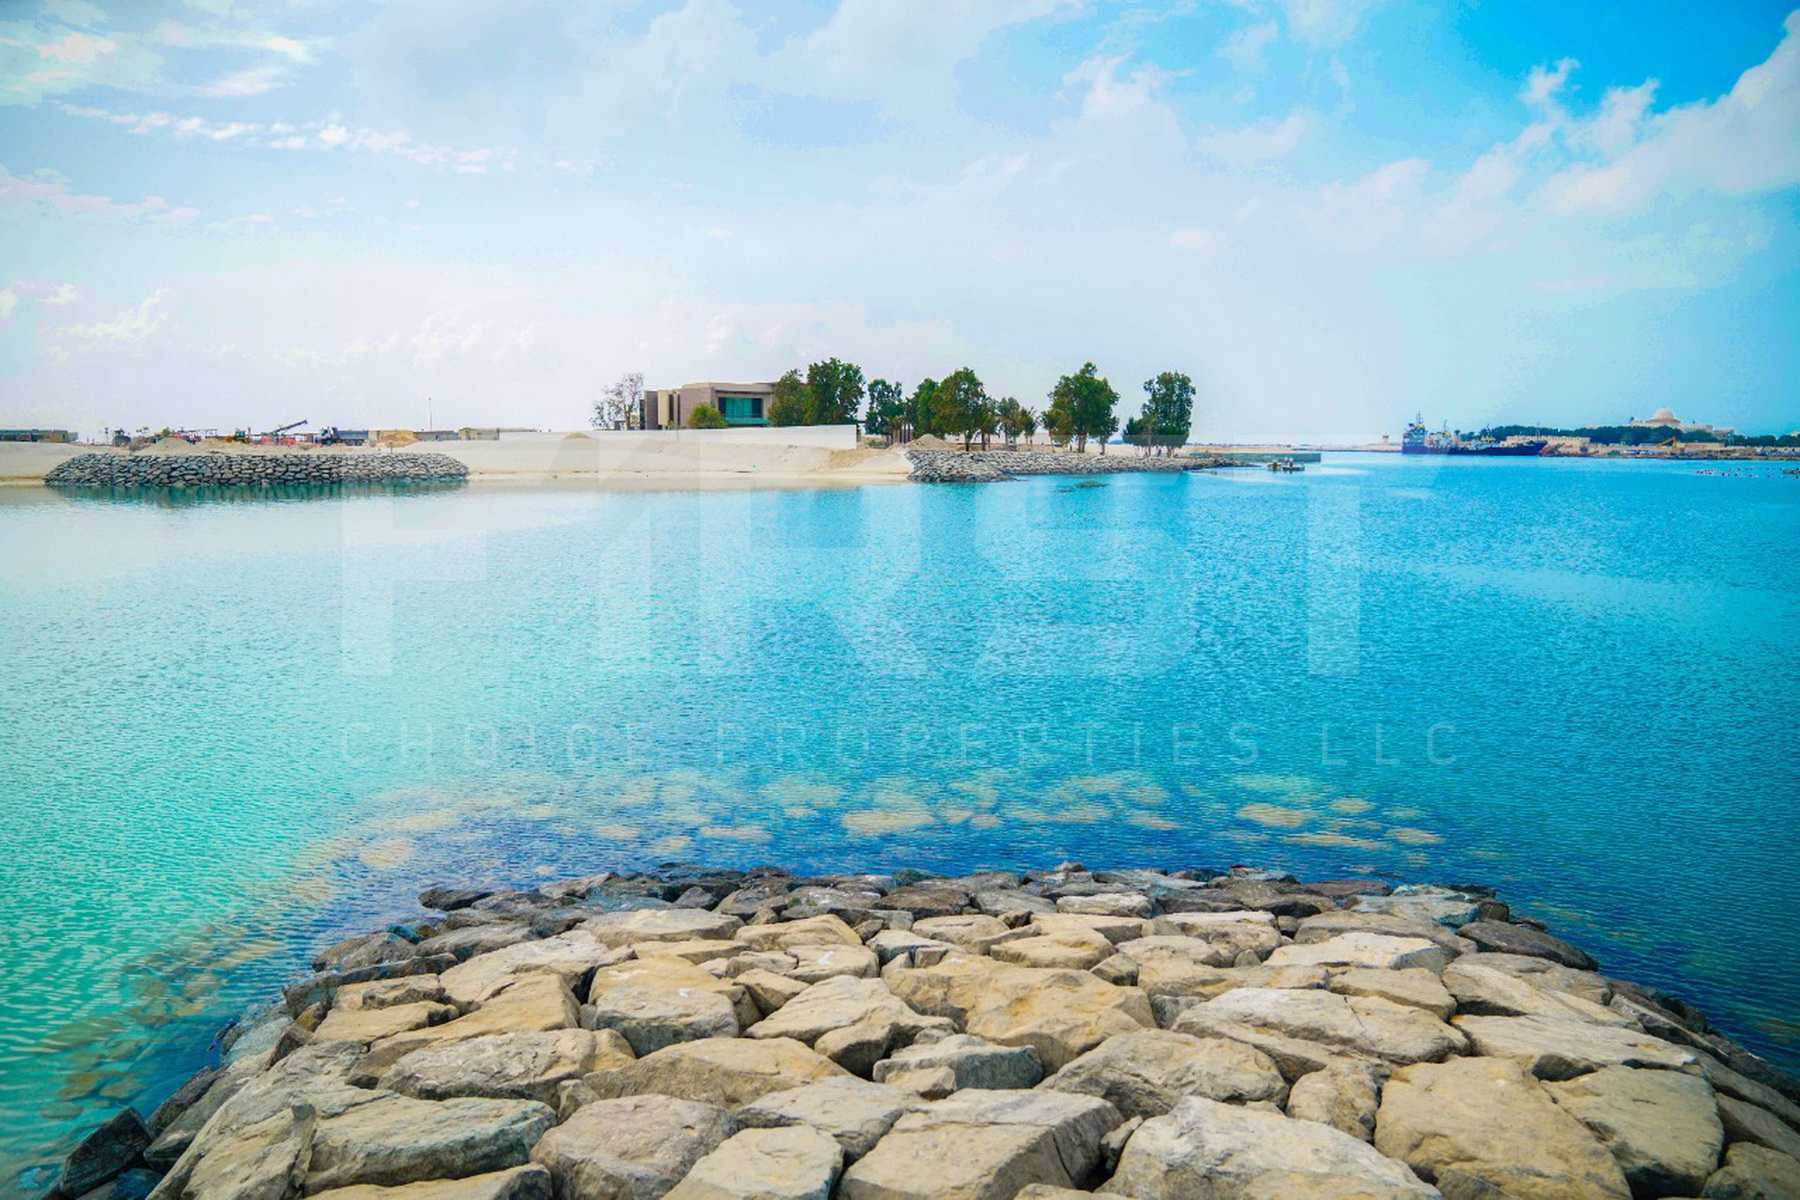 External Photos of NAreel Island Abu Dhabi UAE (5).jpg